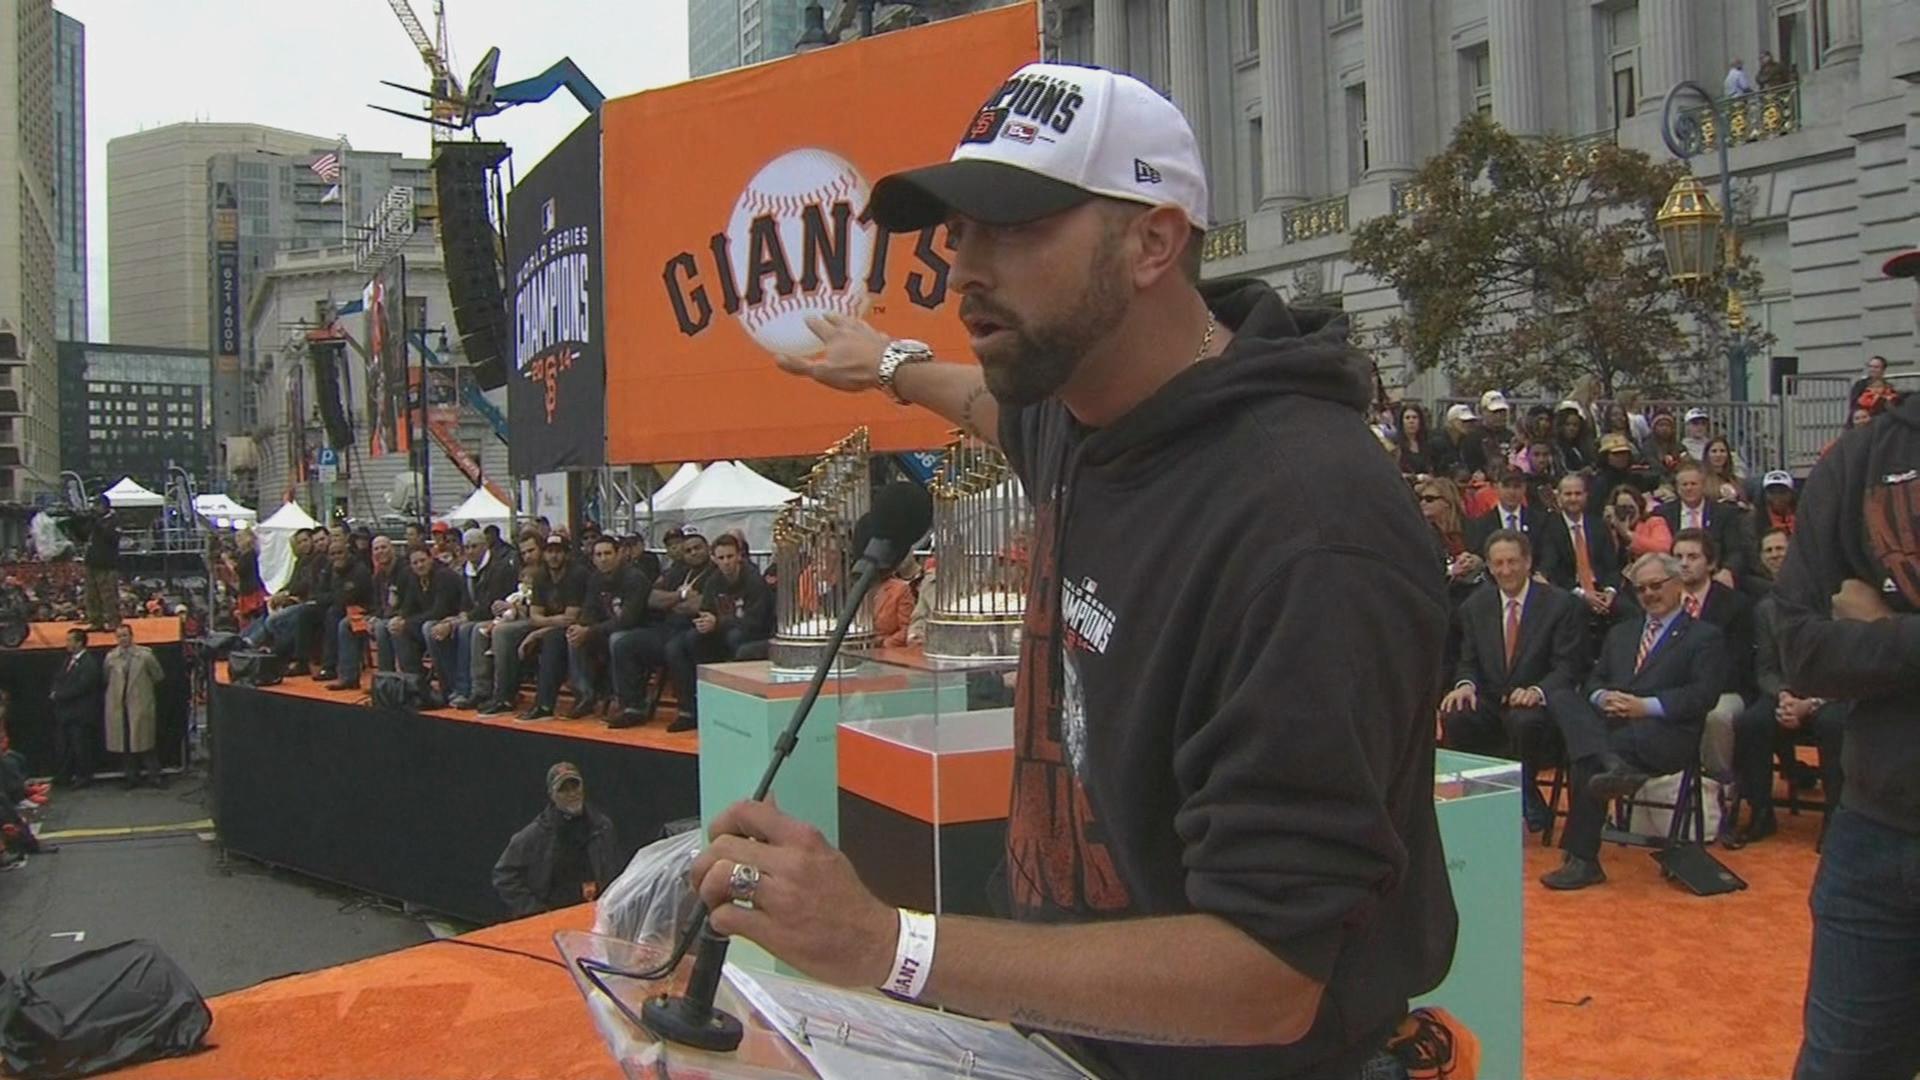 VIDEO: 2014 San Francisco Giants Victory Parade highlights - ABC7